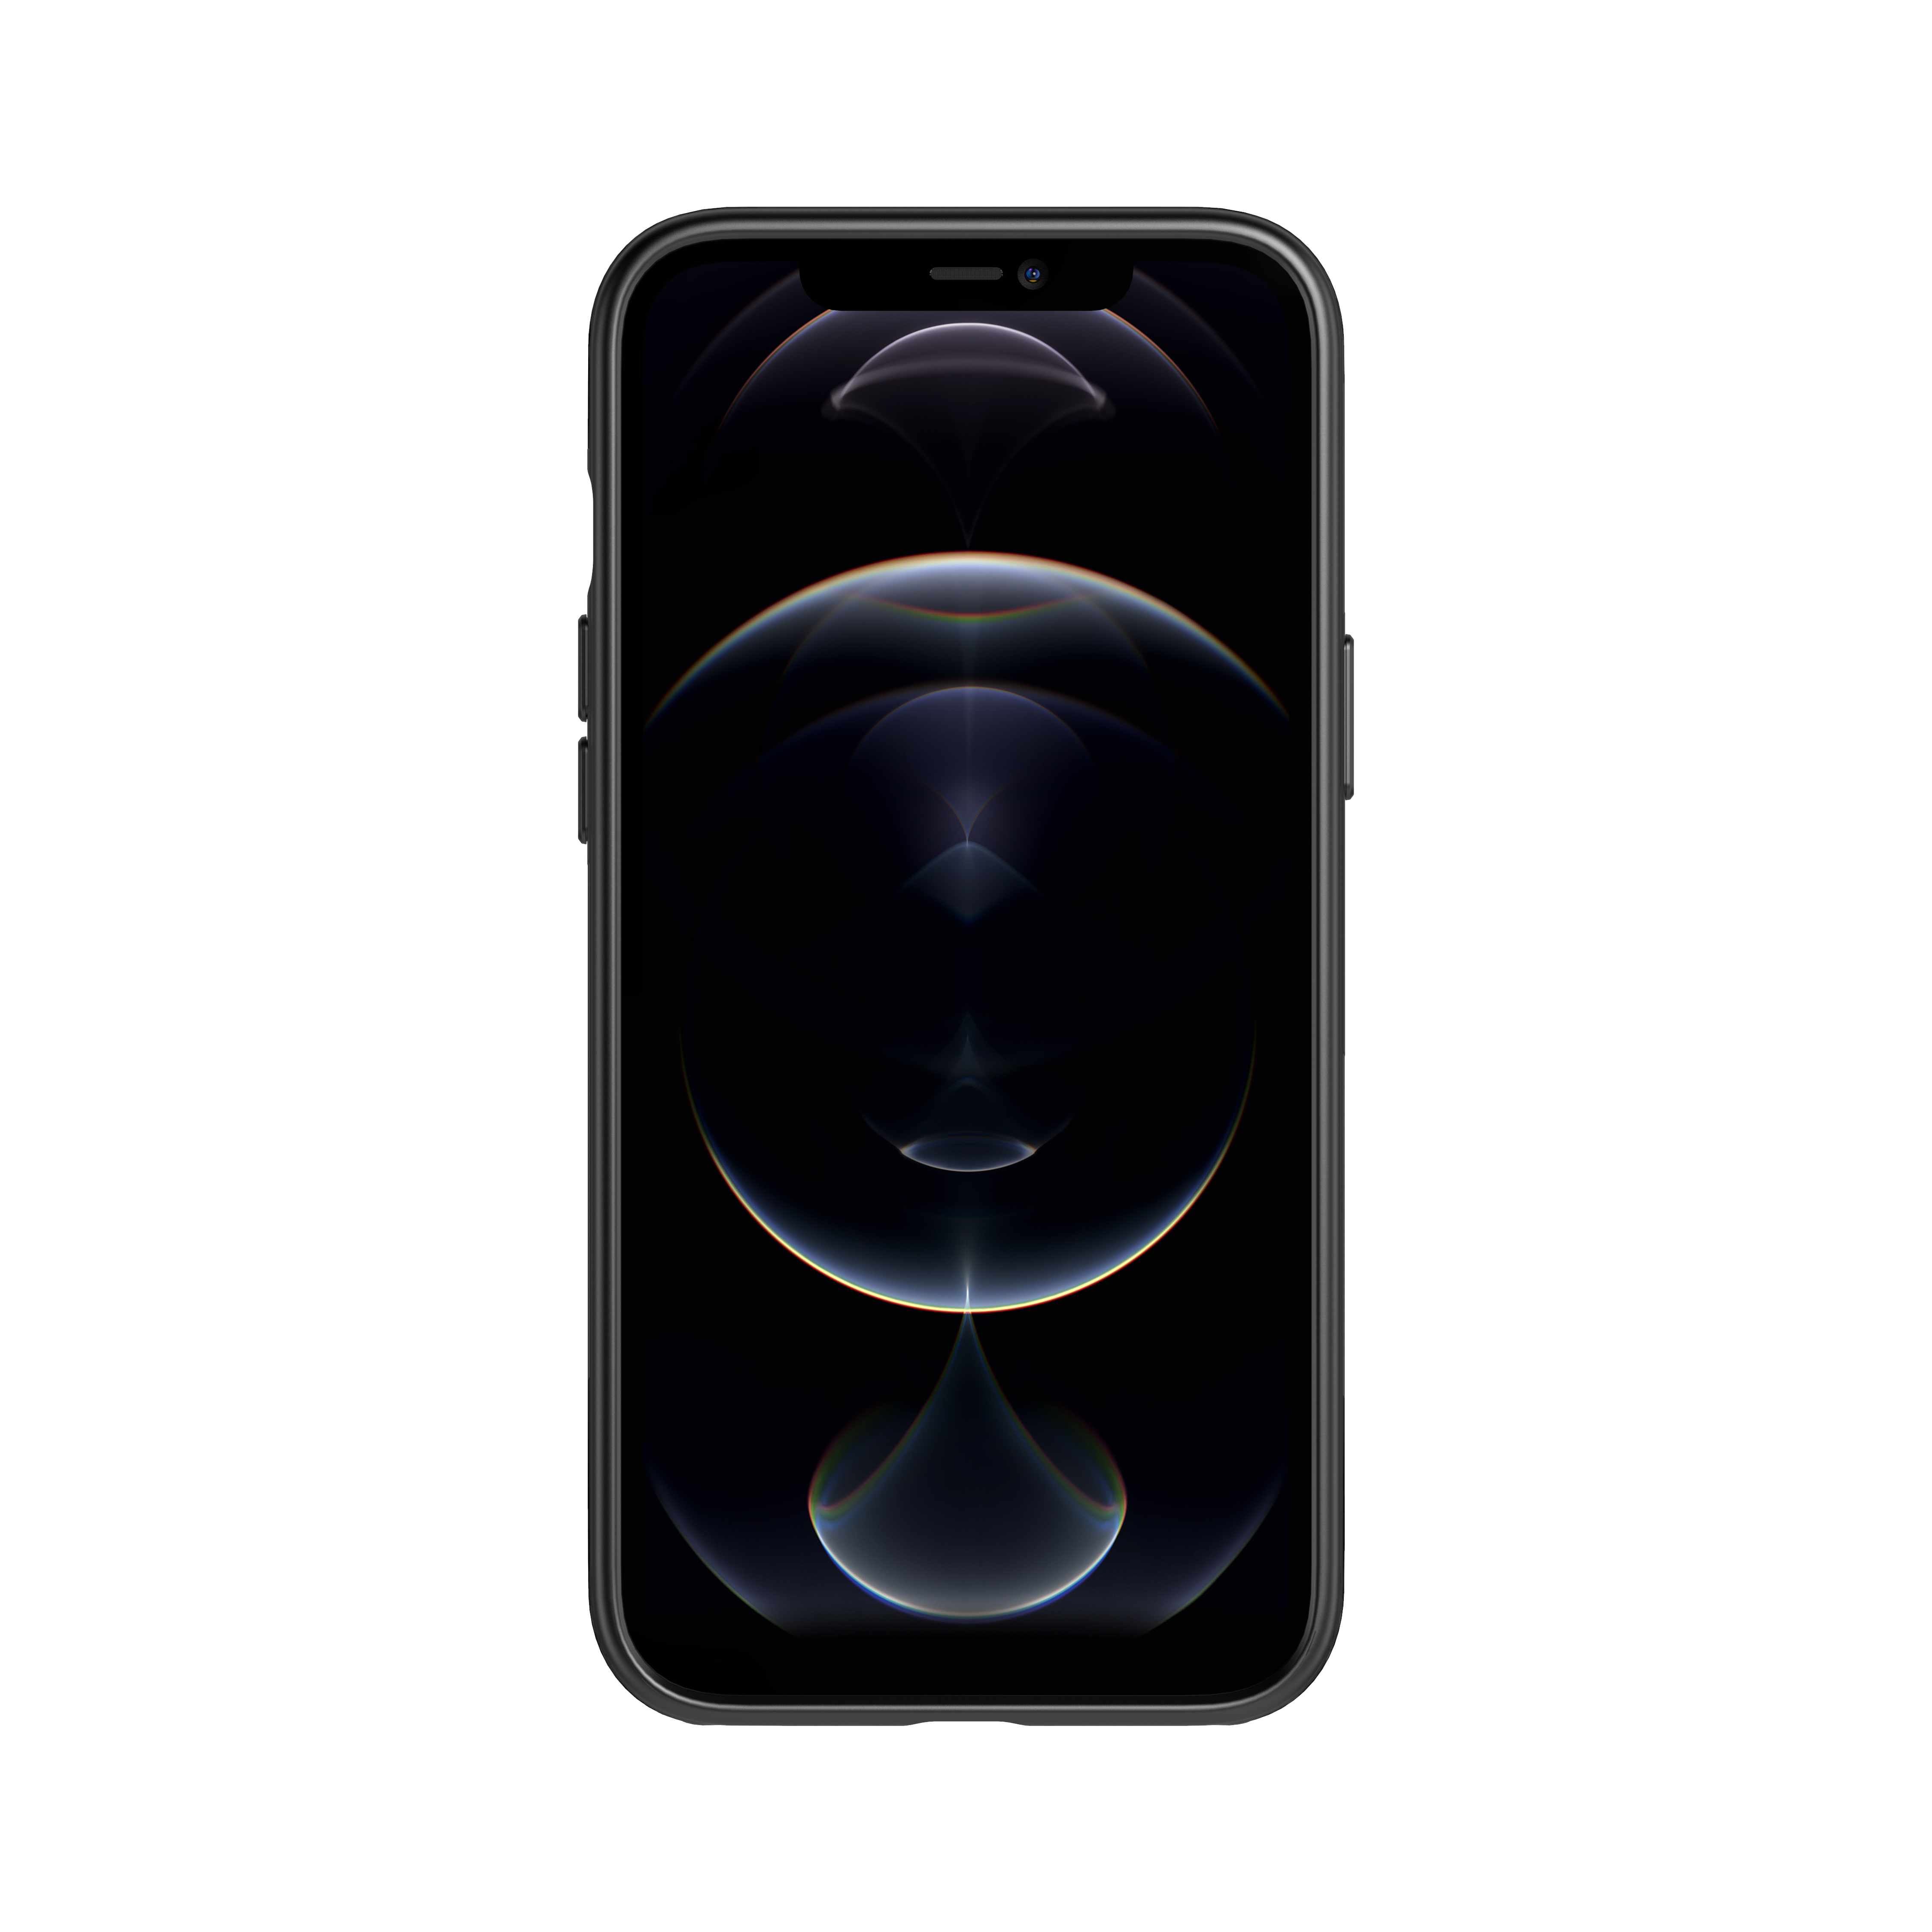 Evo Slim Case iPhone 12 Pro Max Charcoal Black